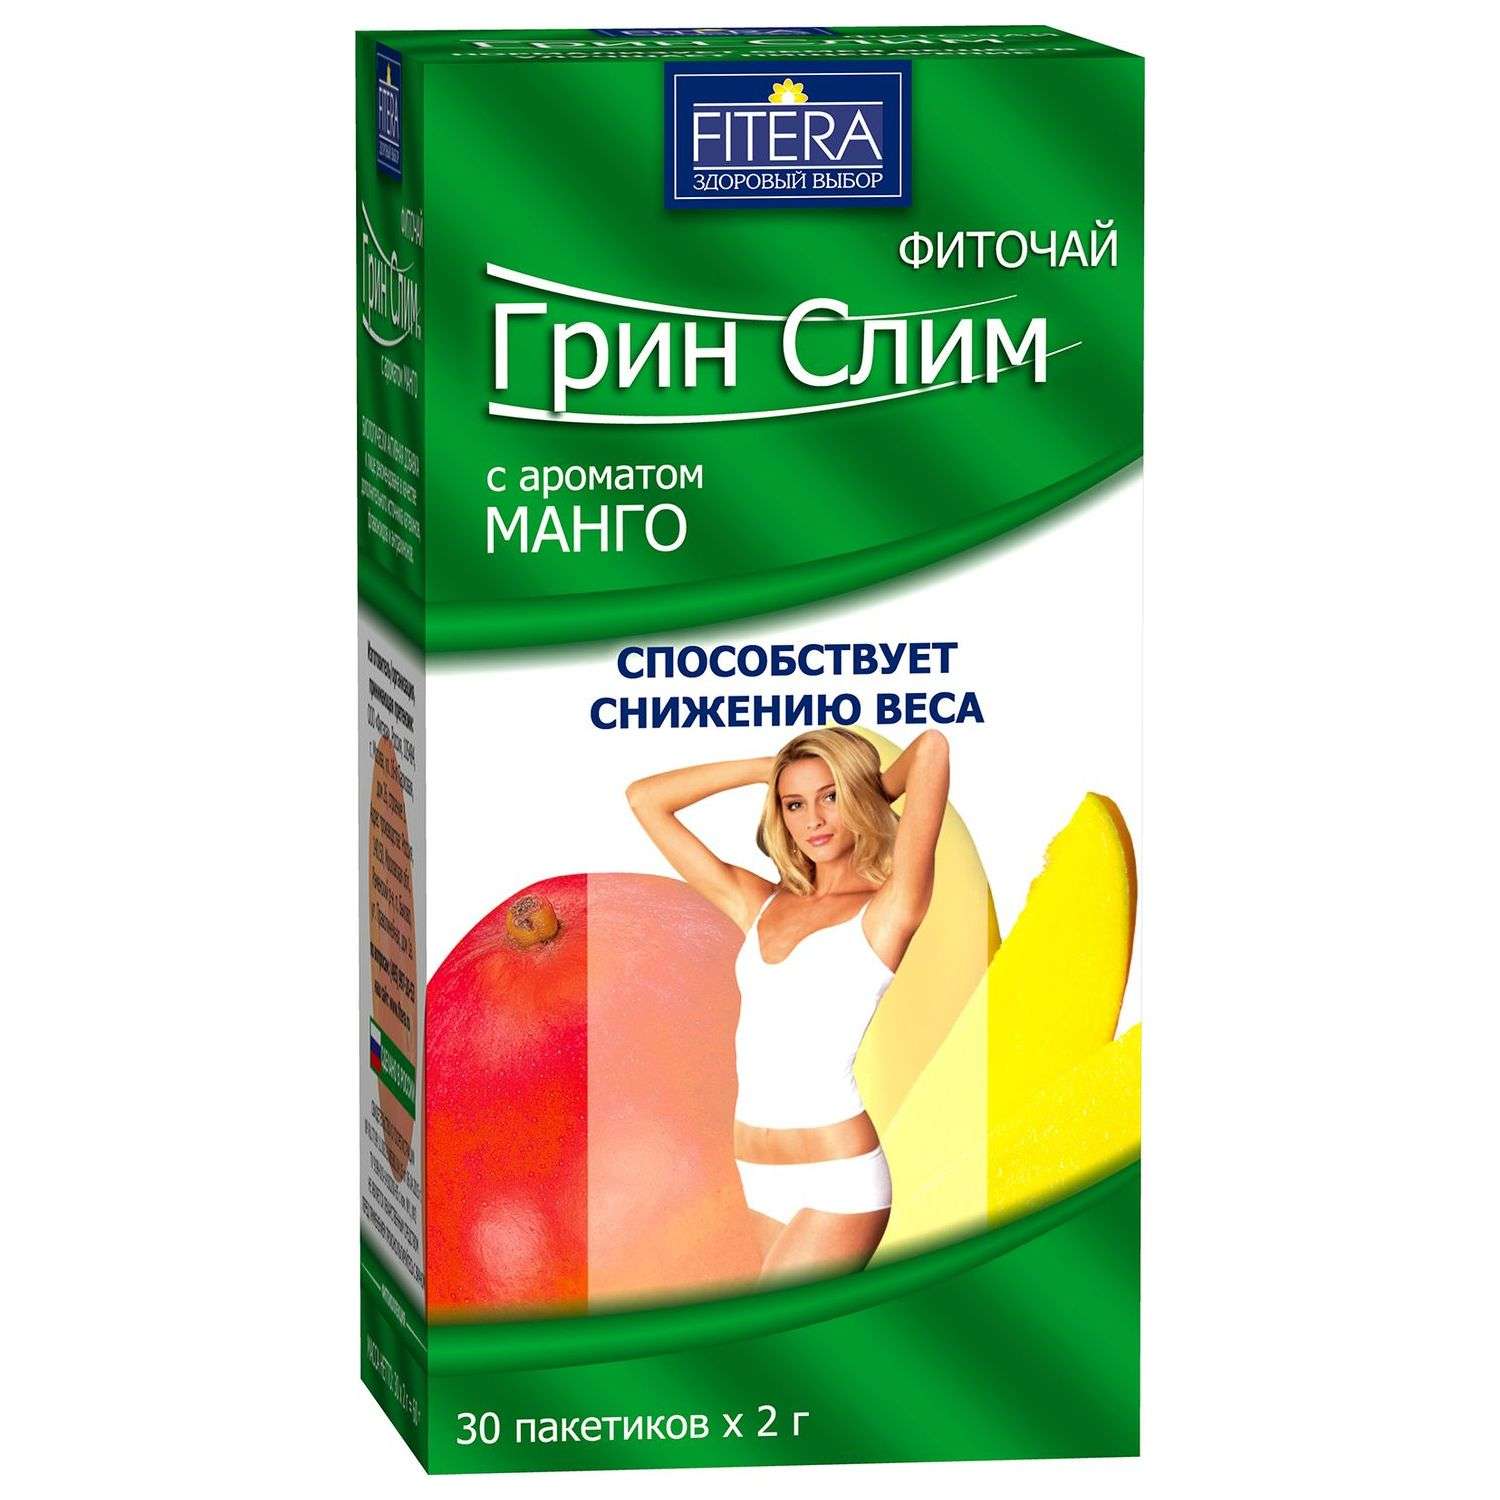 Фиточай Fitera Грин Слим аромат манго 30пакетиков - фото 1